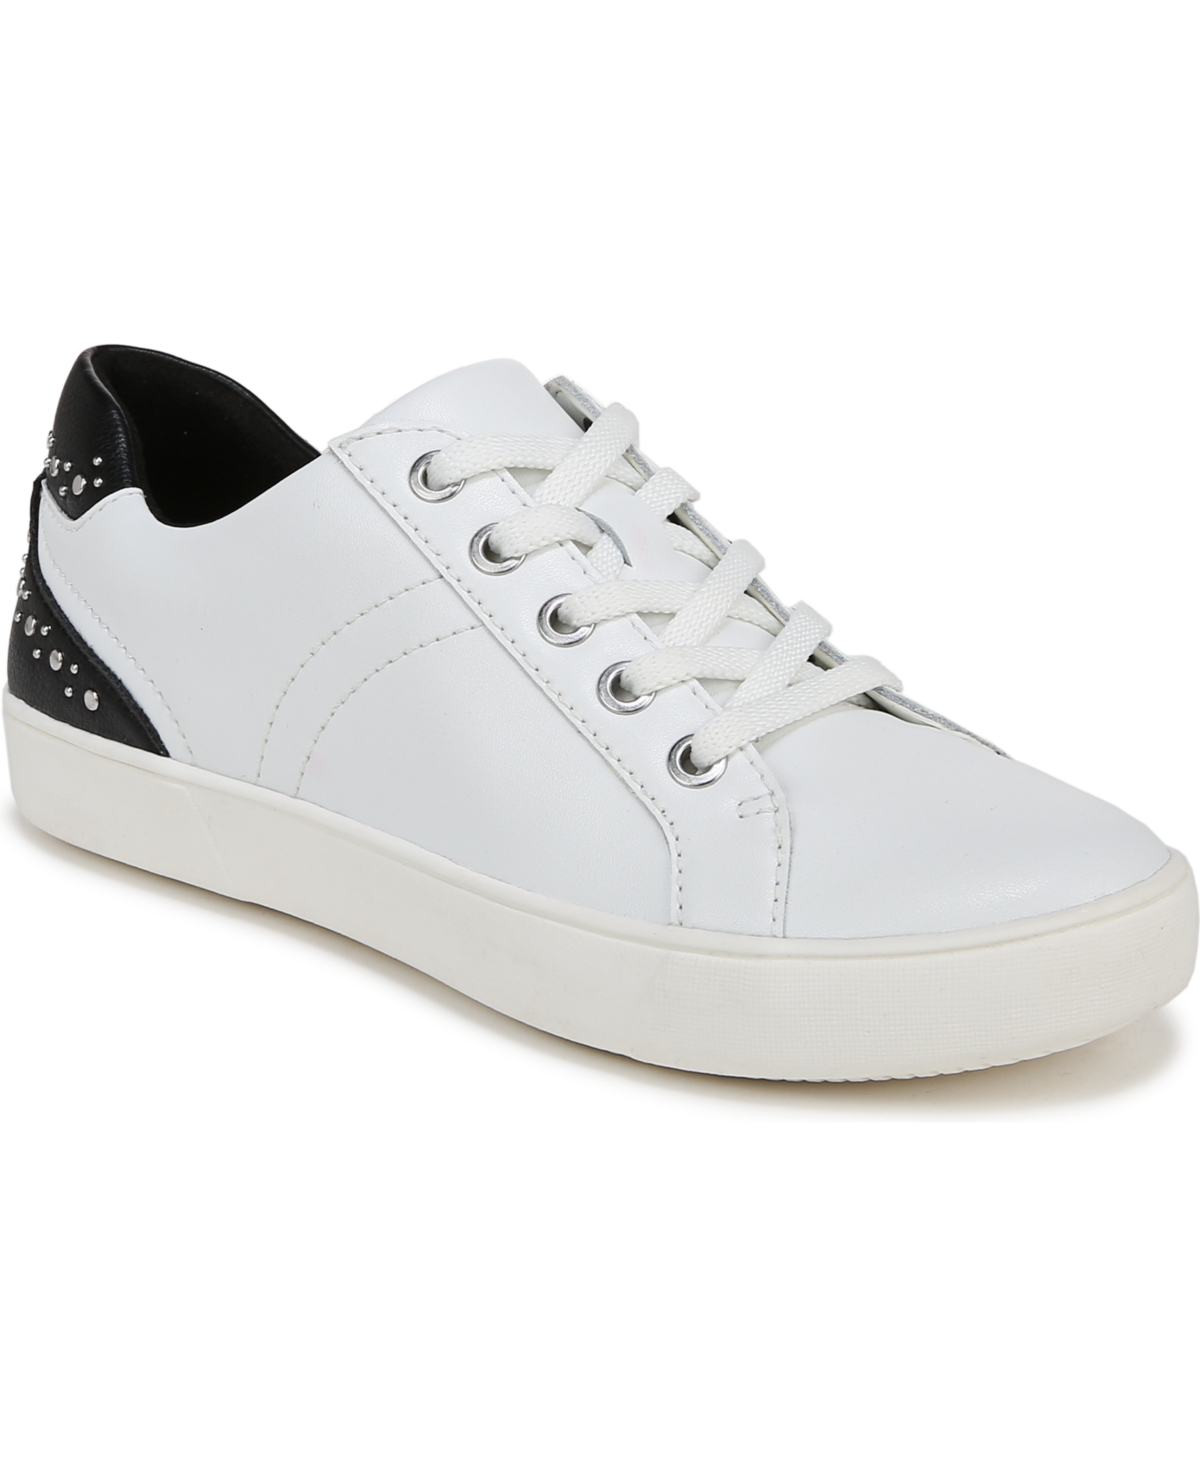 Morrison-Stud Sneakers - White/Black Leather